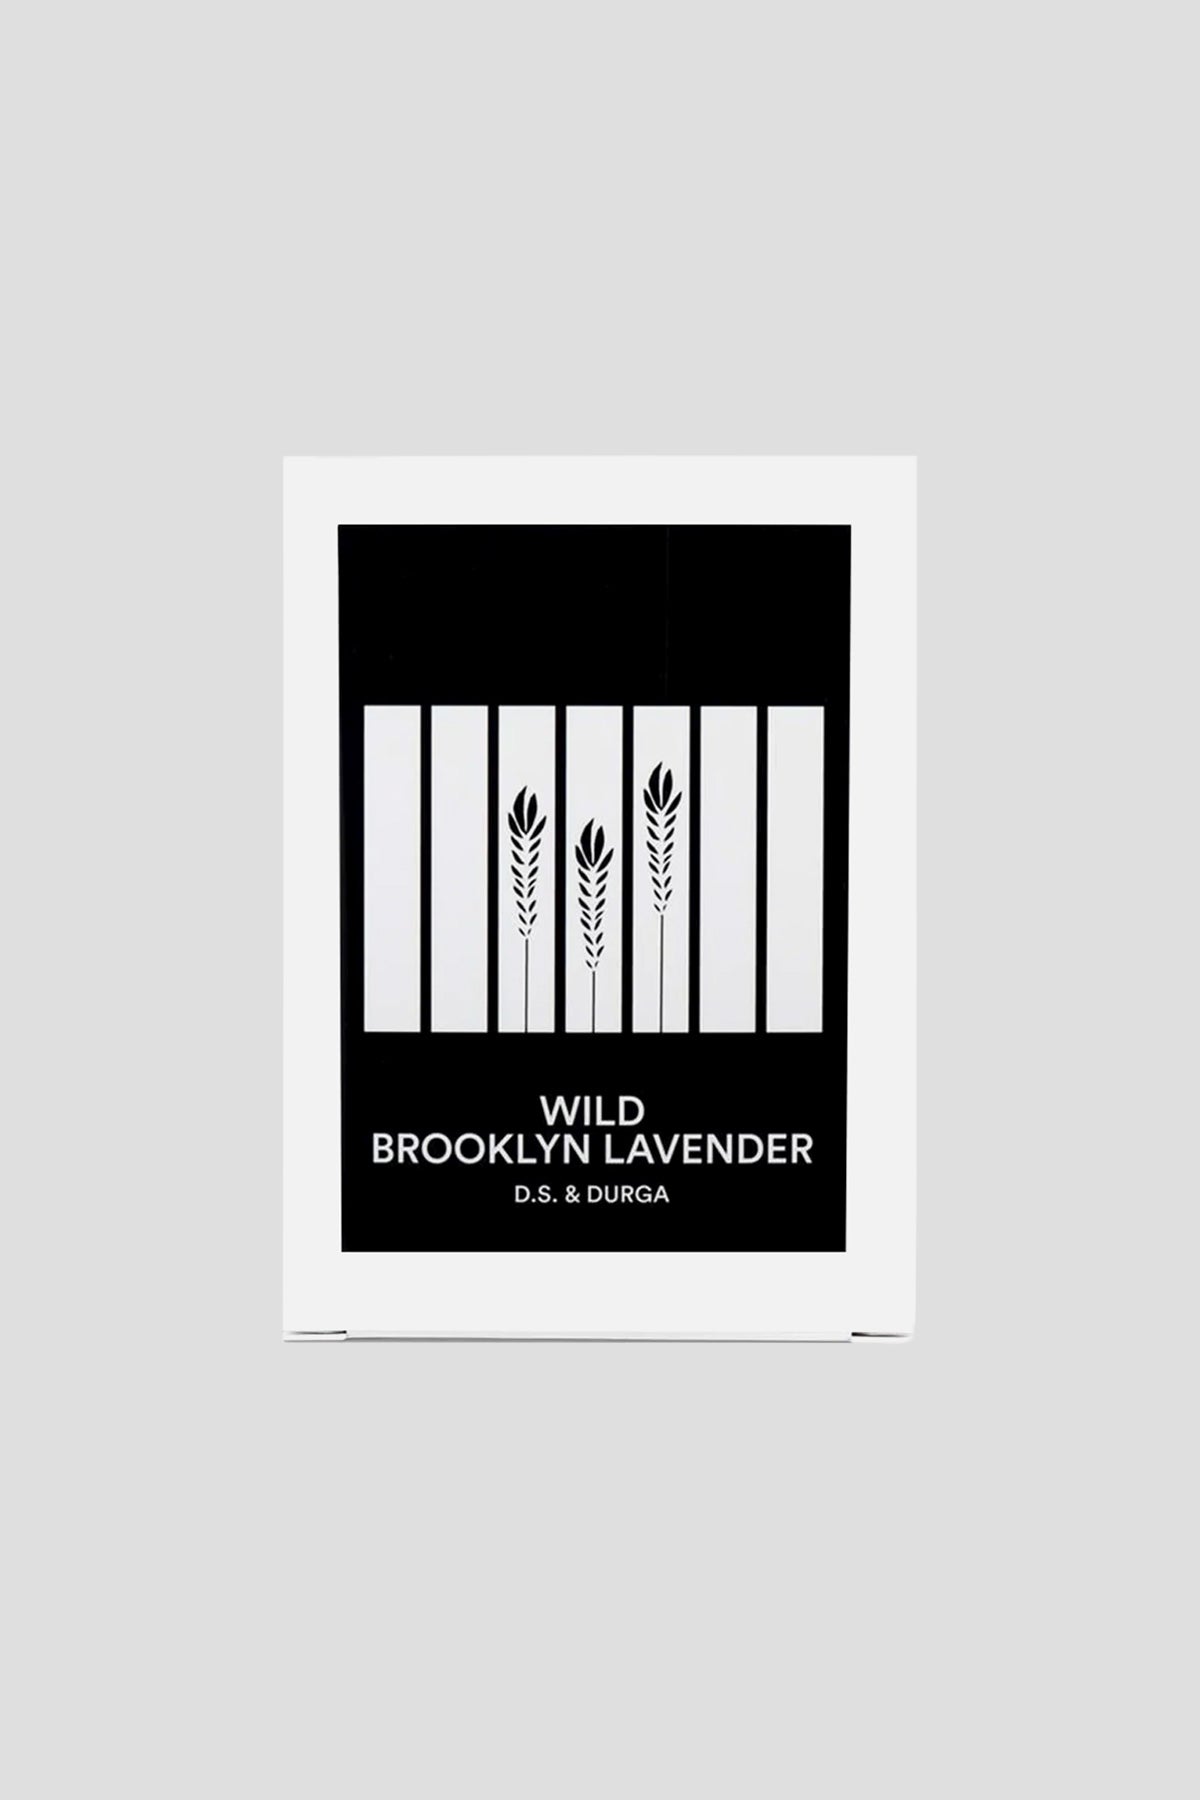 Wild Brooklyn Lavender Candle